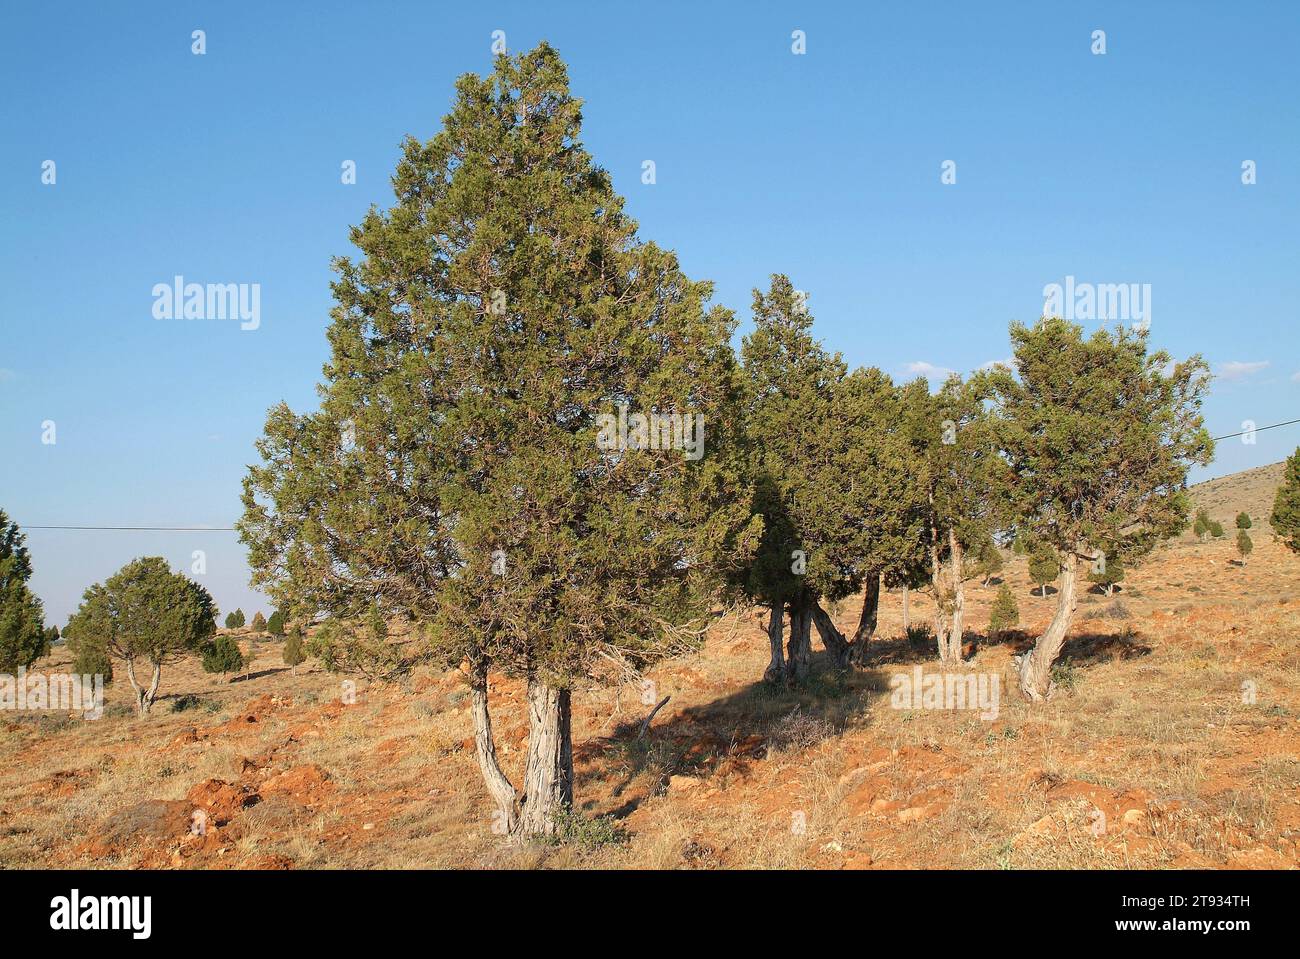 Greek juniper (Juniperus excelsa) is a small tree or shrub native to eastern Mediterranean region. This photo was taken in Turkey. Stock Photo